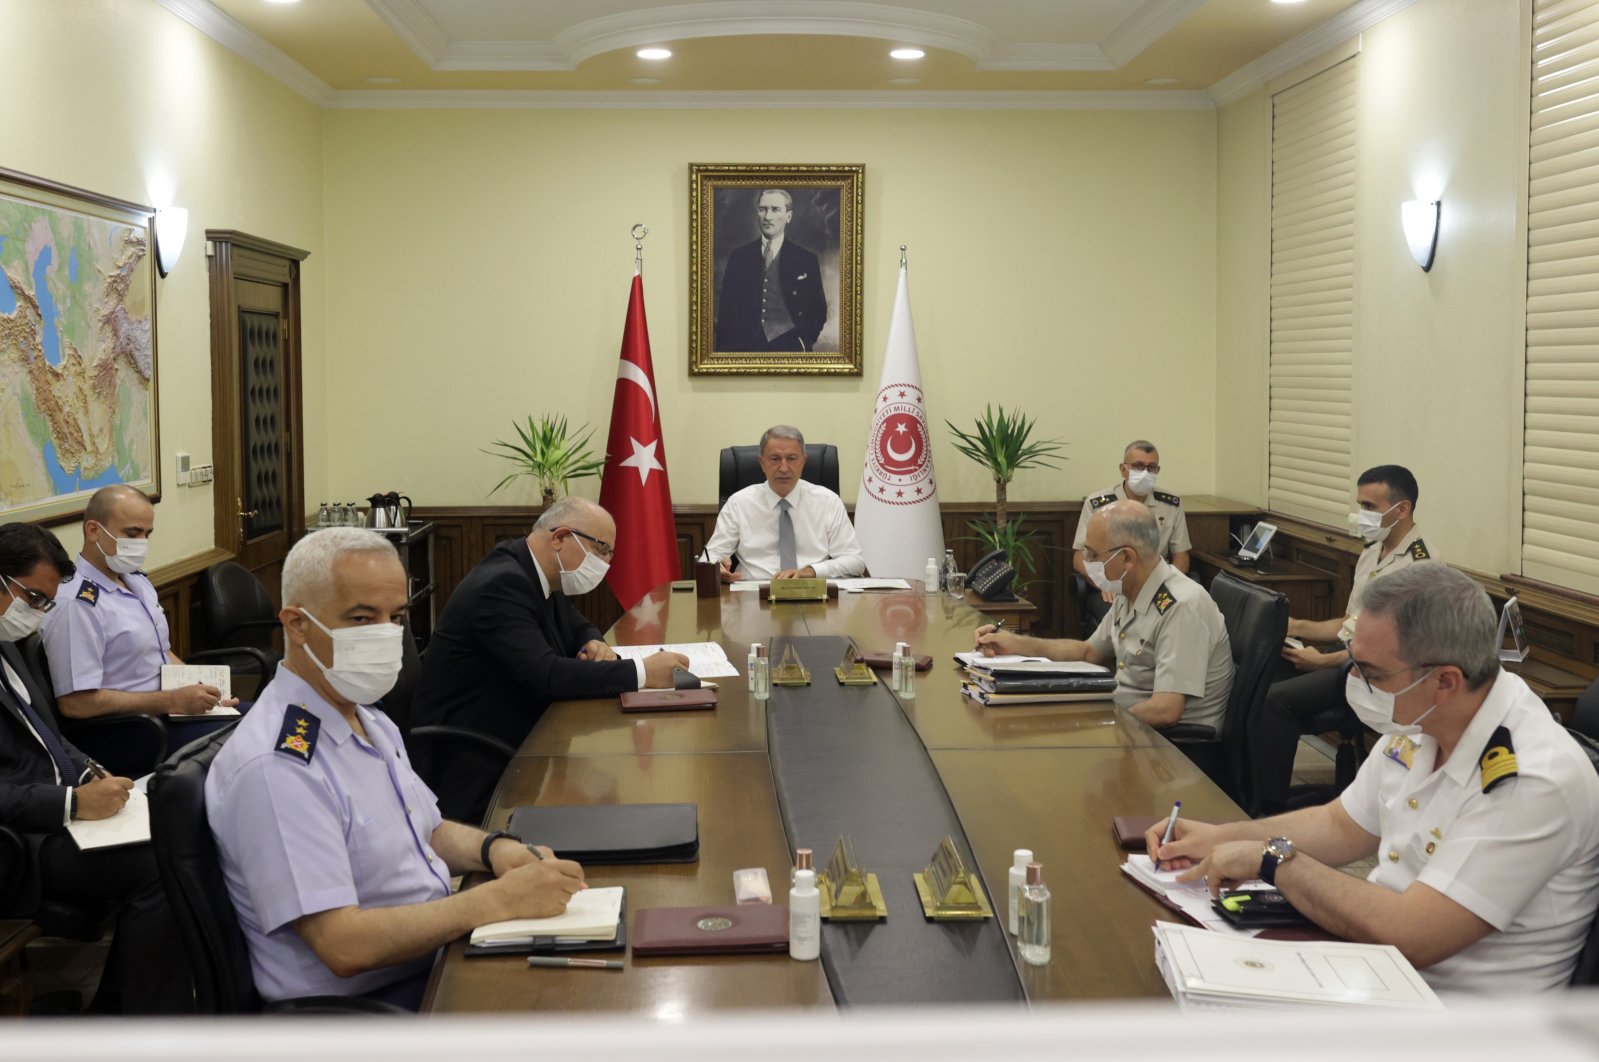 Defense Minister Hulusi Akar speaks at a meeting in the capital Ankara, Turkey, Aug. 3, 2021. (IHA Photo)